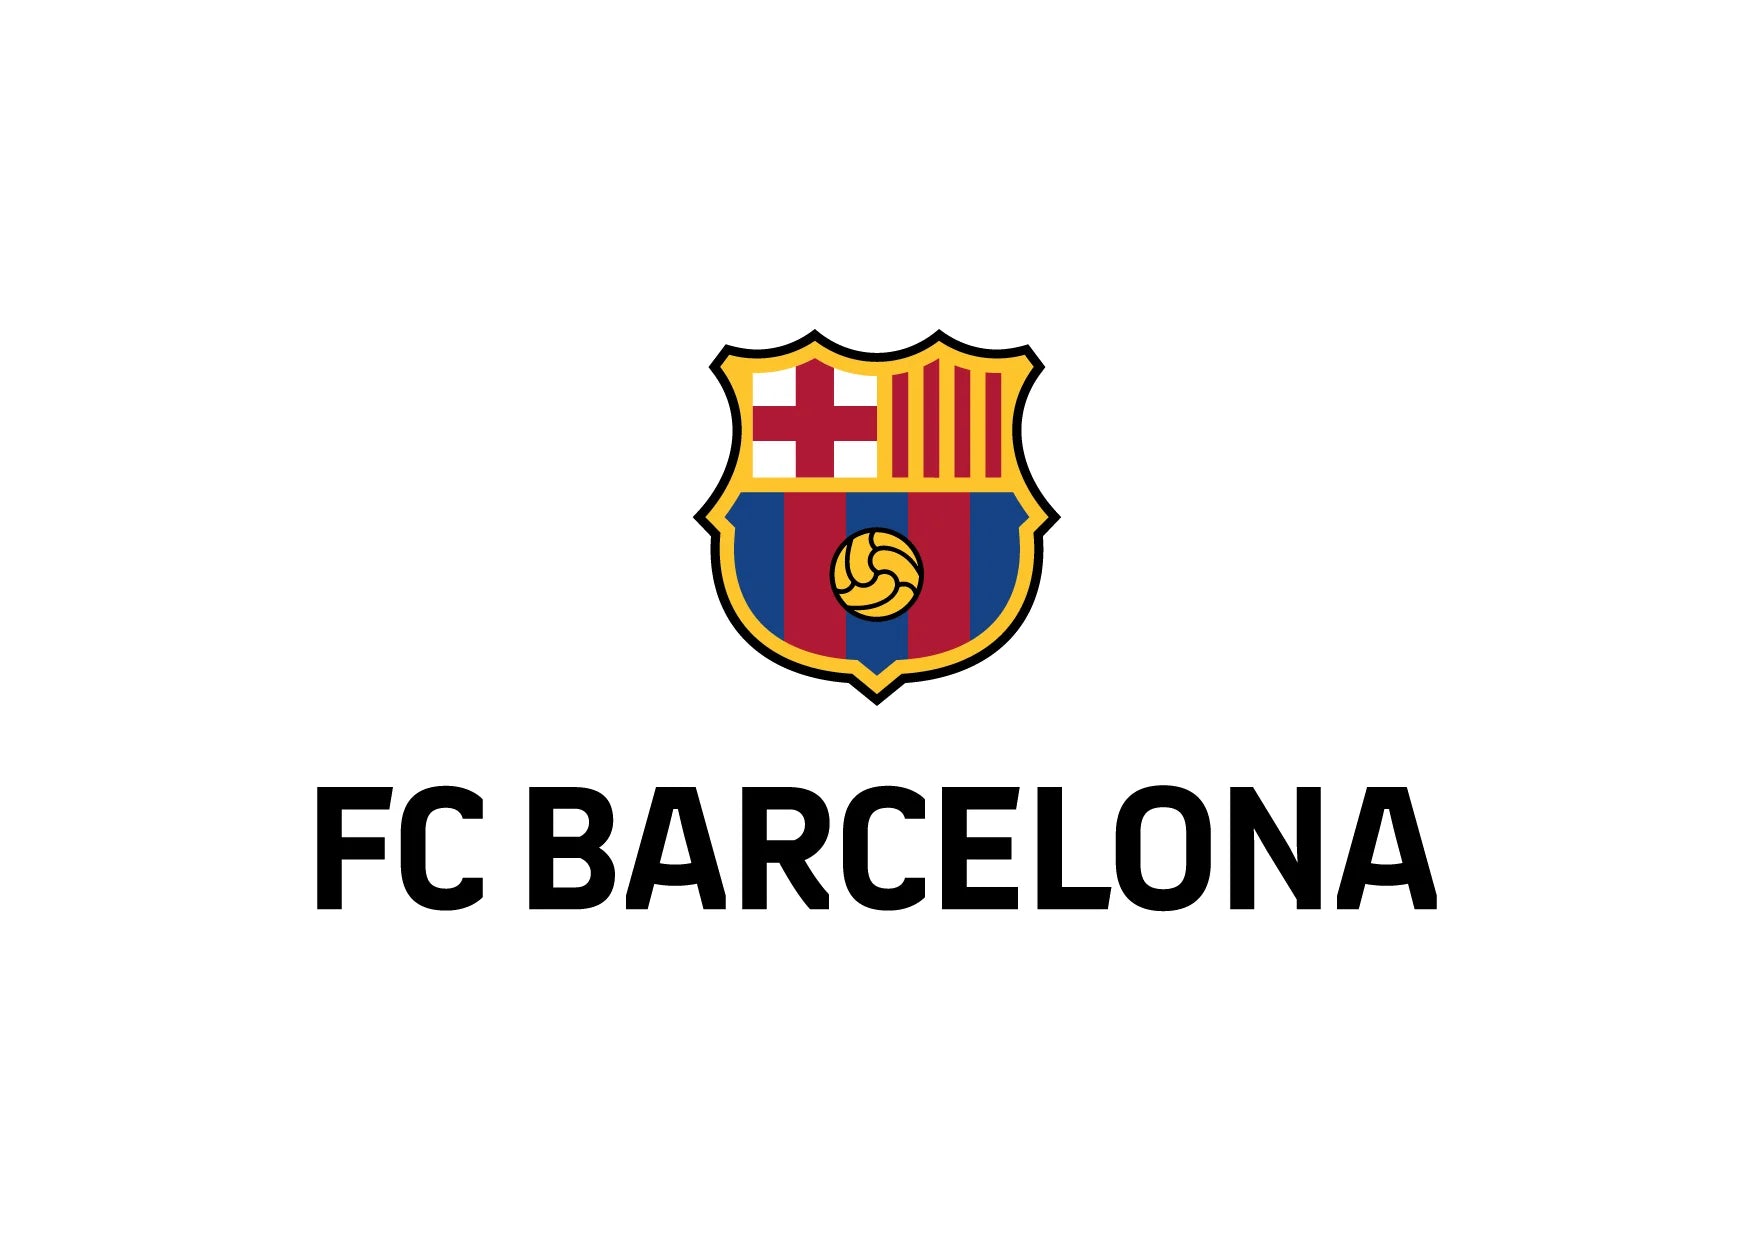 Camiseta Barcelona 1995-1997 Visitante – camisetasfutbolbaloncesto